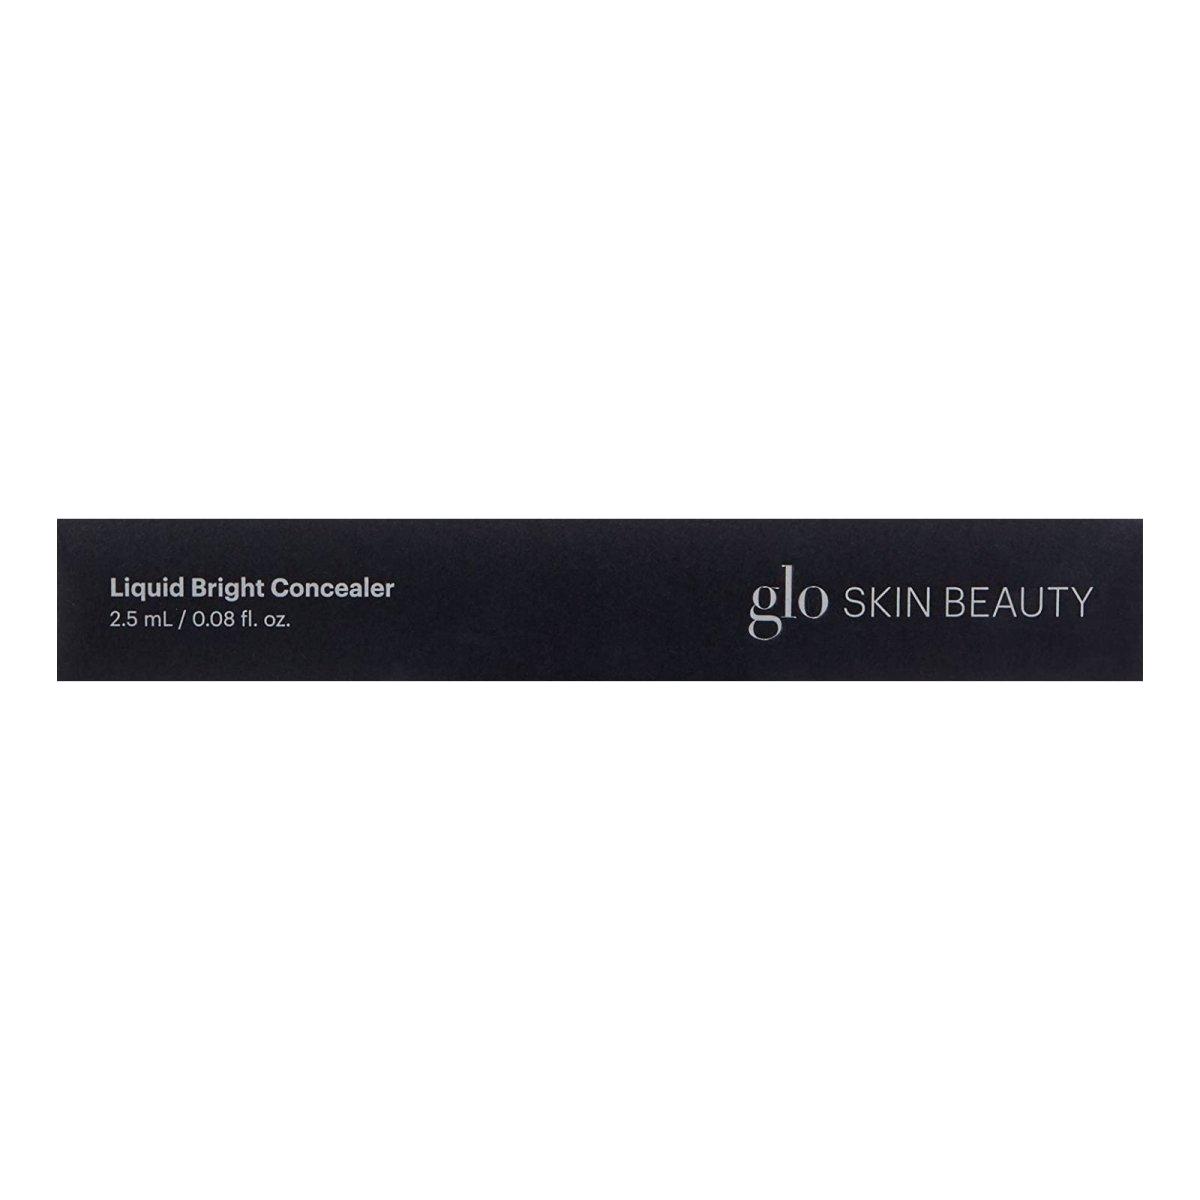 Glo Skin Beauty | Liquid Bright Concealer - DG International Ventures Limited